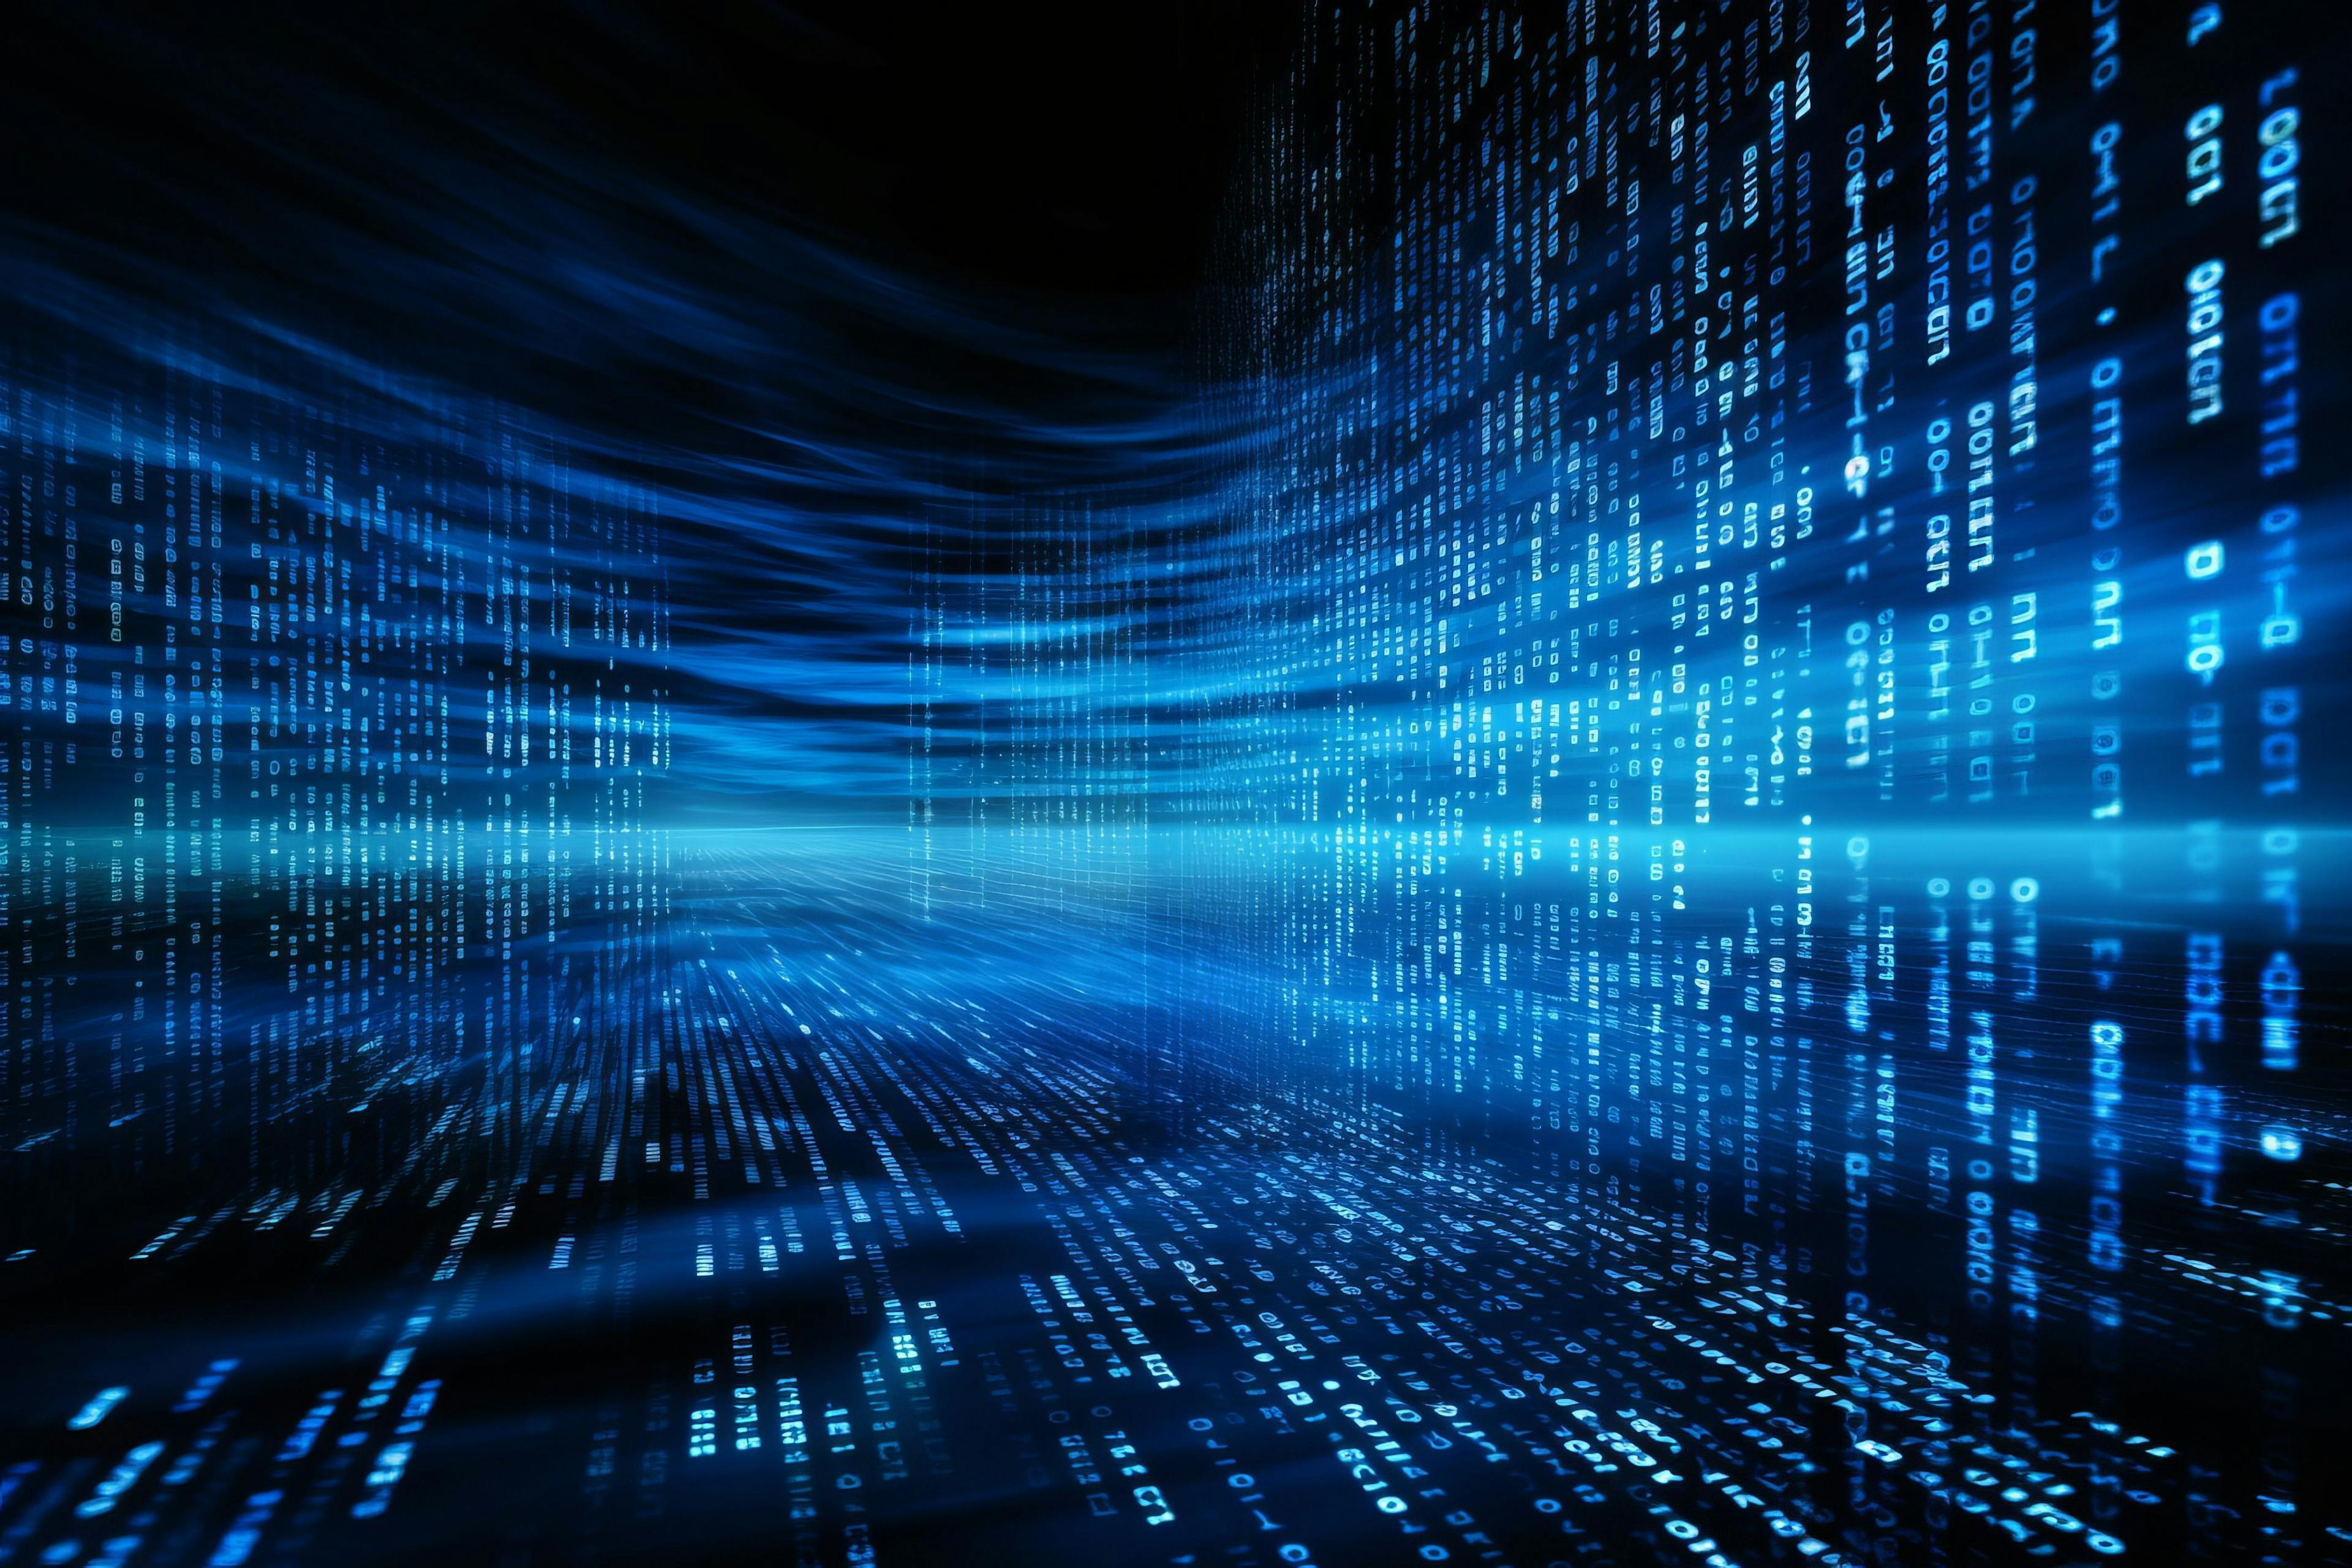 Blue digital binary data on computer screen background. | Image Credit: © Denis - stock.adobe.com.